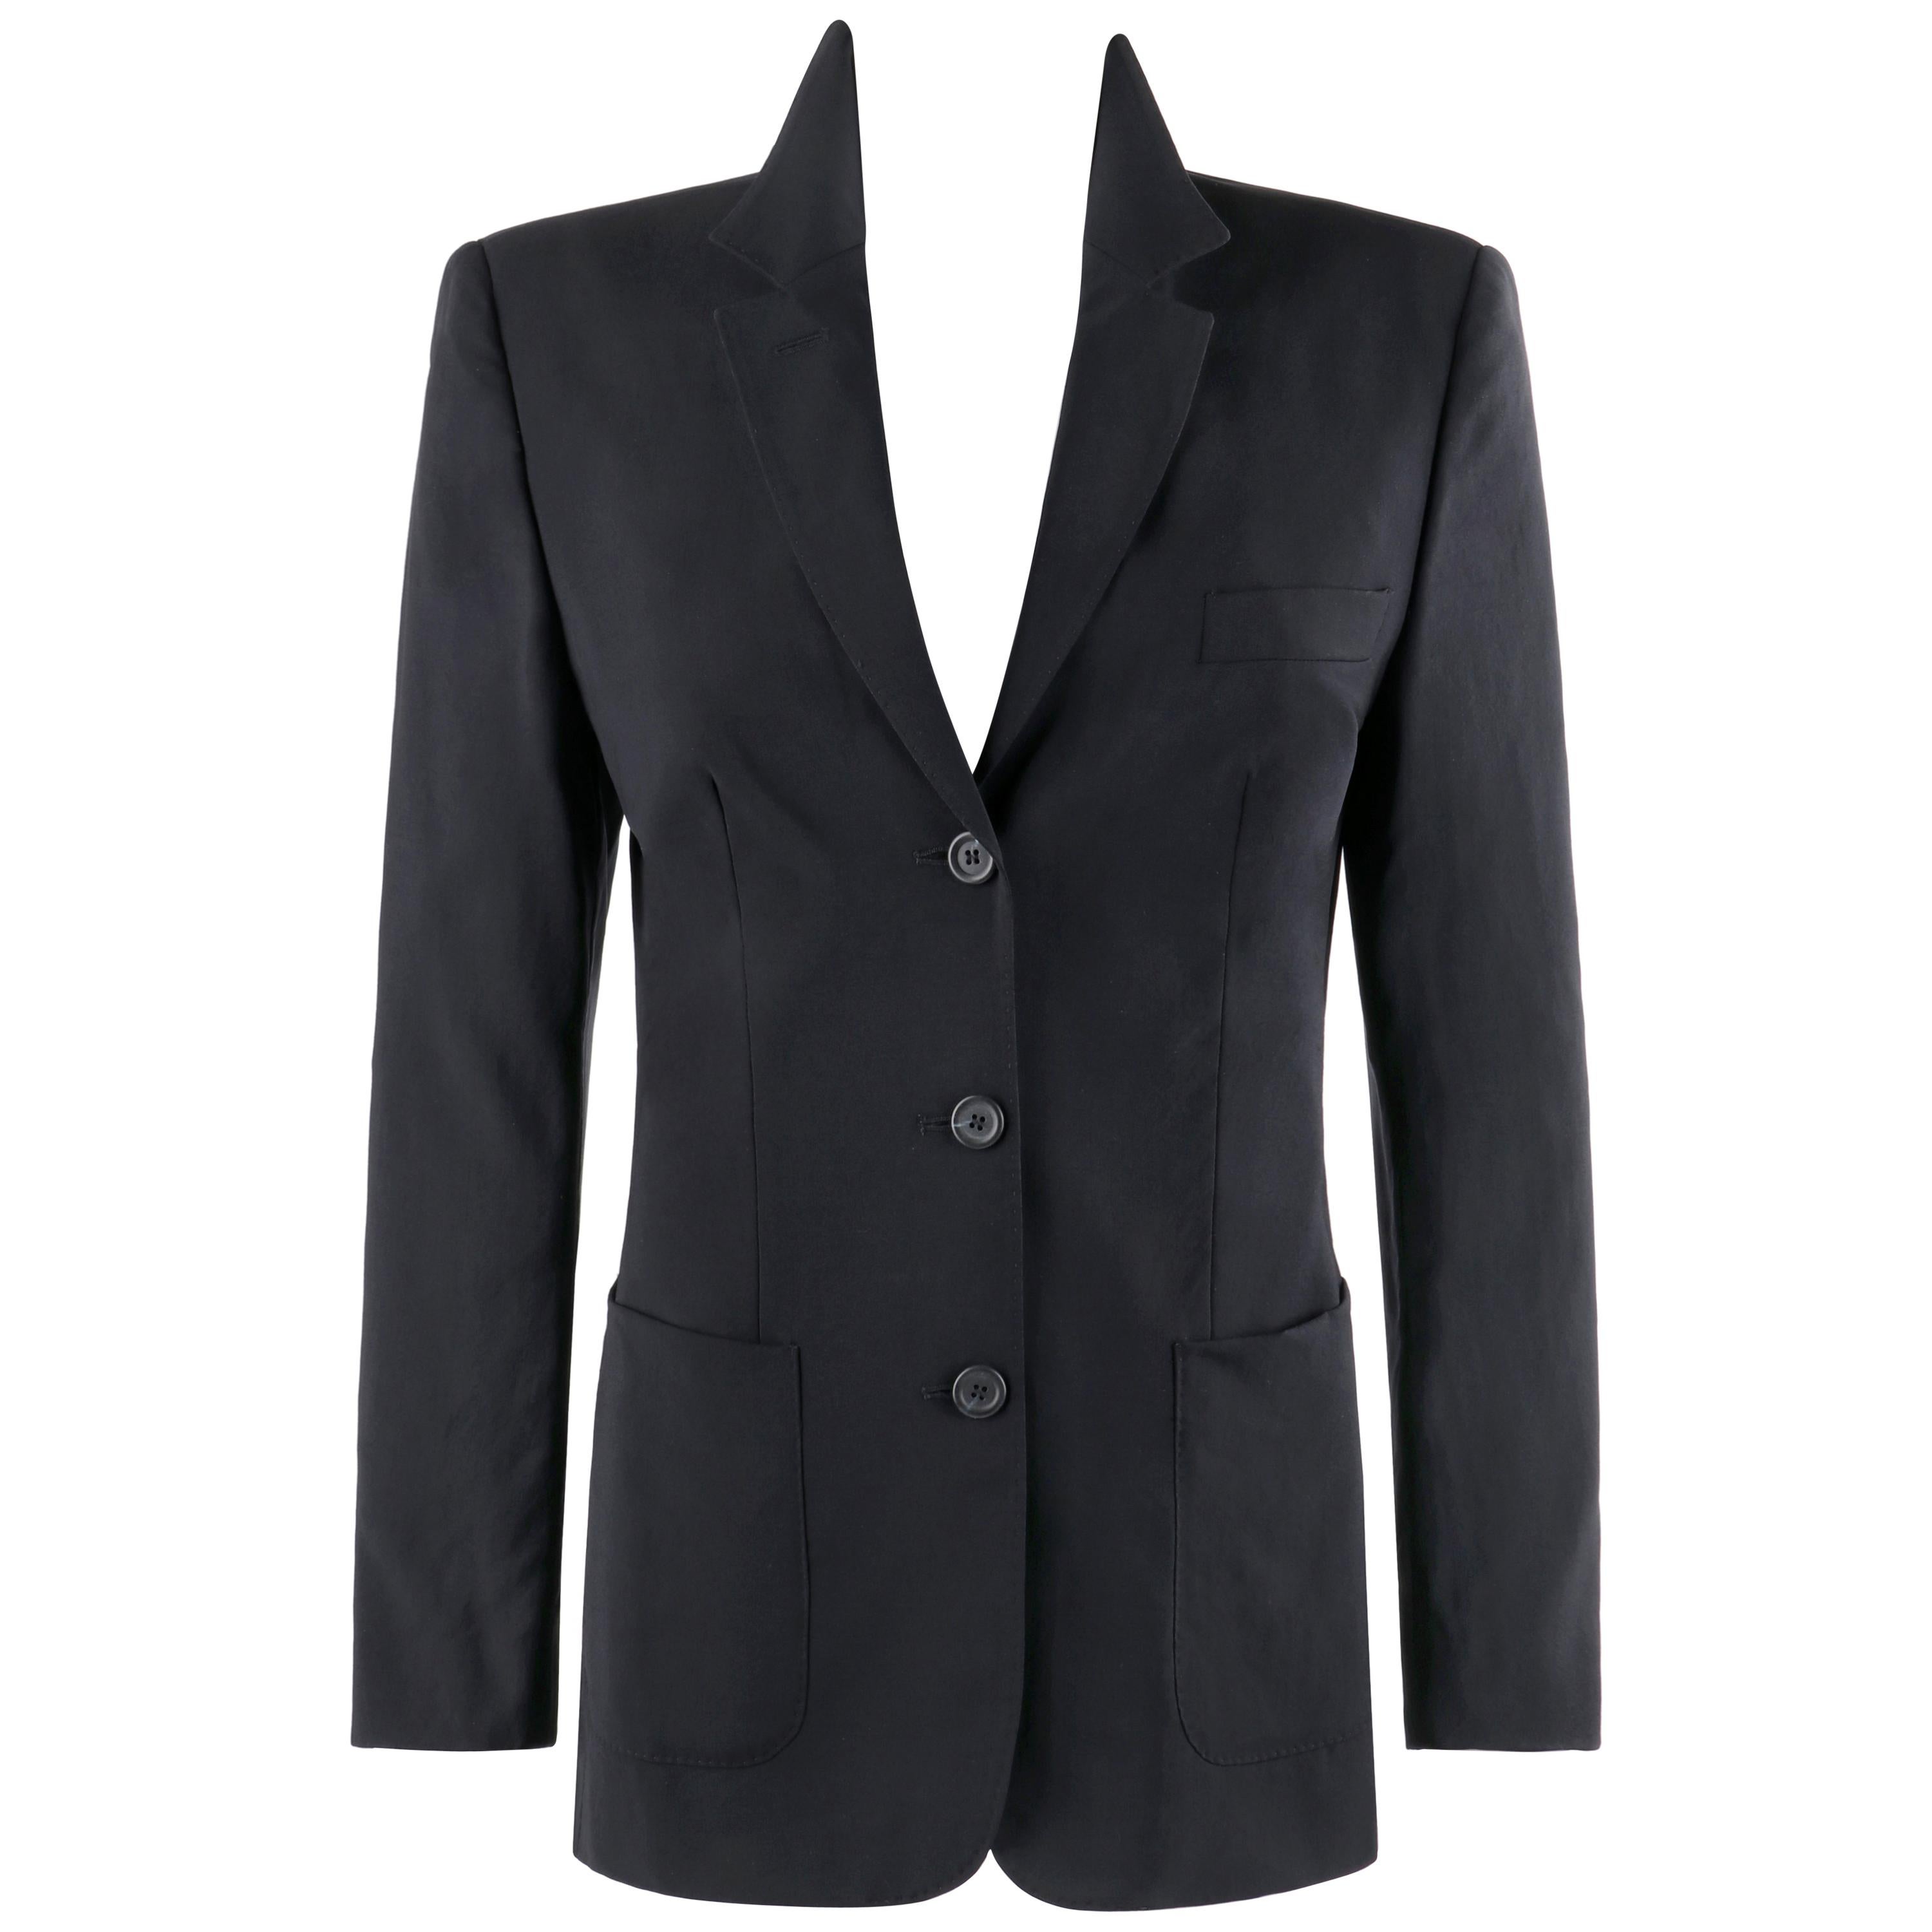 ALEXANDER McQUEEN S/S 1996 "Neptune" Black Long Sleeve Blazer Jacket For Sale